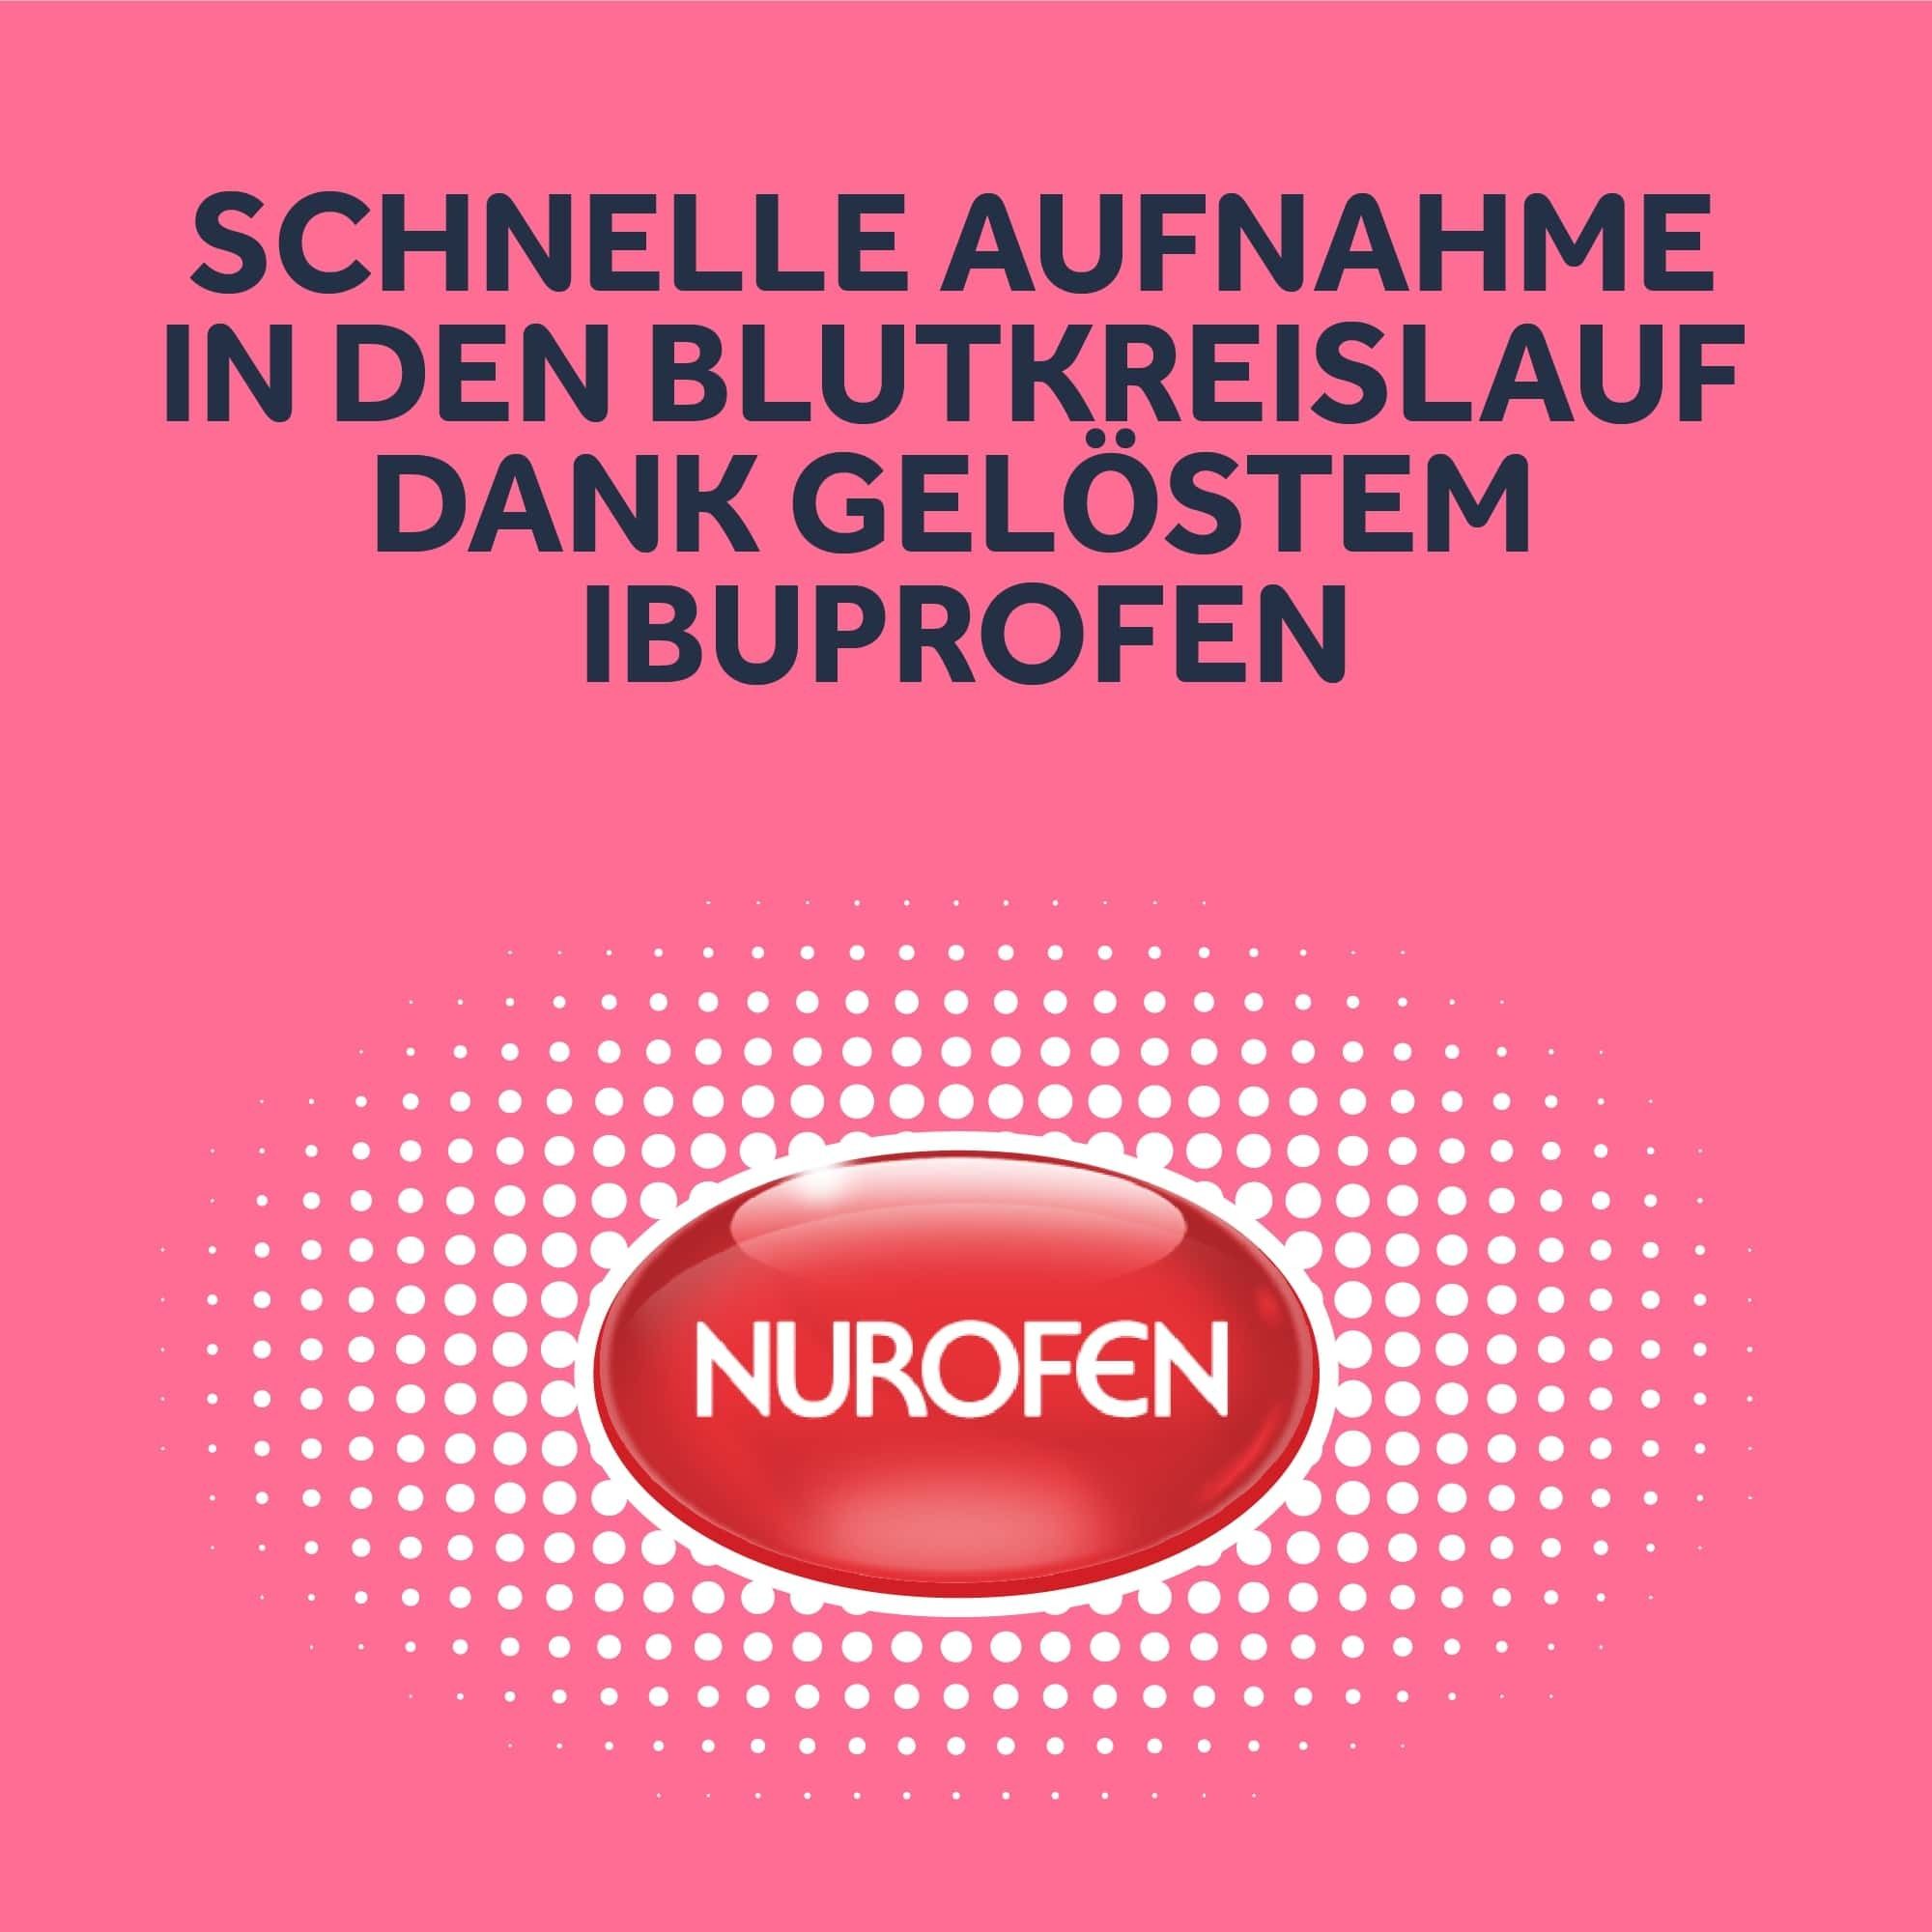 Nurofen Immedia Weichkapseln 200 mg Ibuprofen